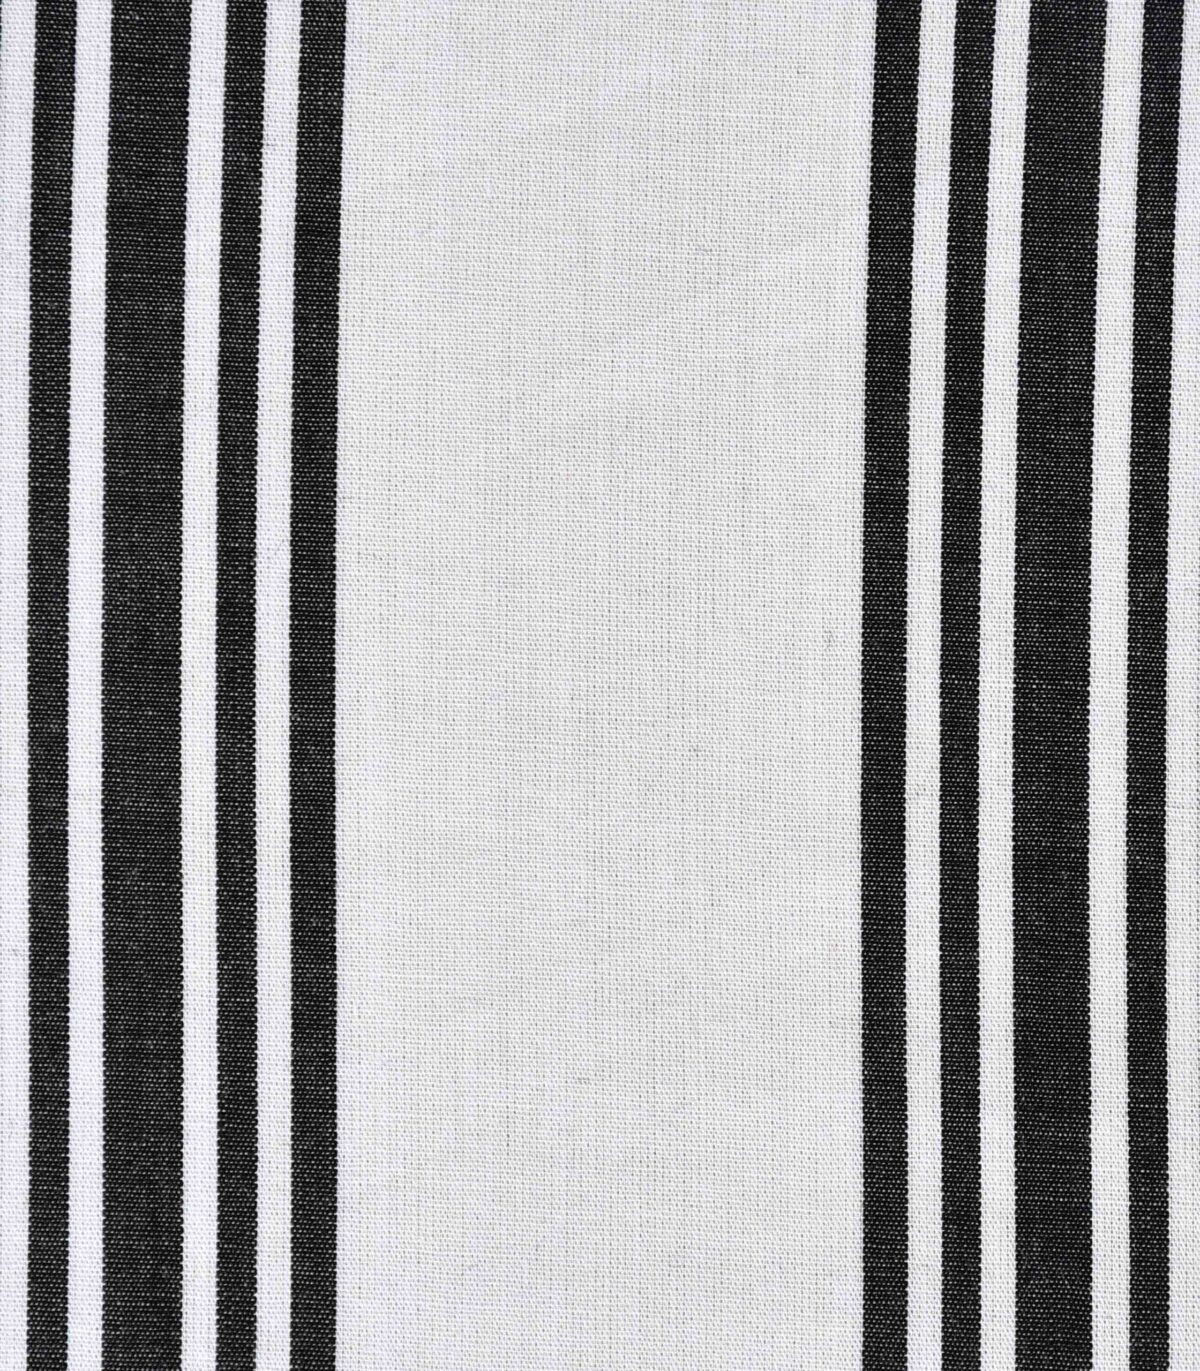 Cotton Yarn Dyed Black Stripe Fabric